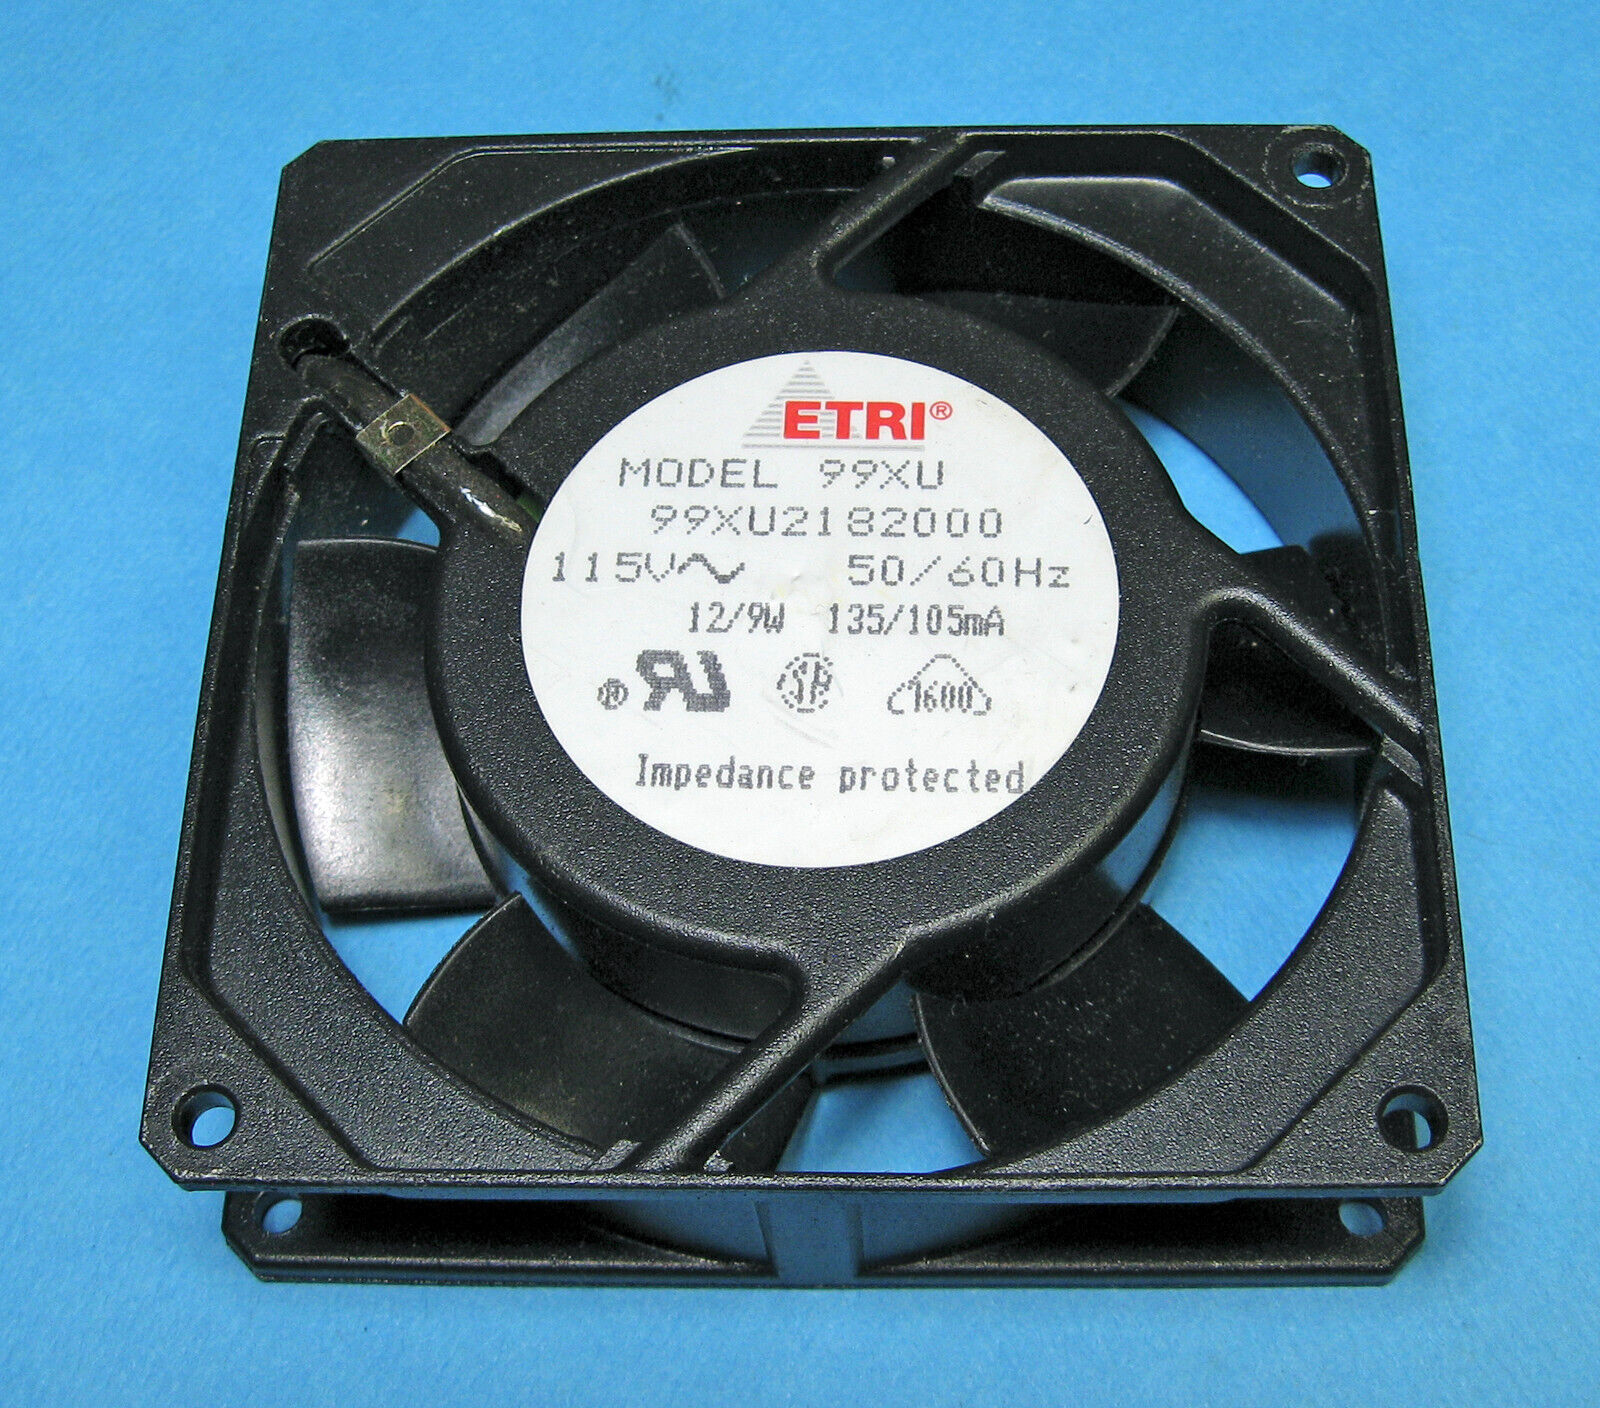 ETRI 99XU Fan 99XU2182000 Impedance Protected 115VAC 50/60Hz 12/9W 135/105mA